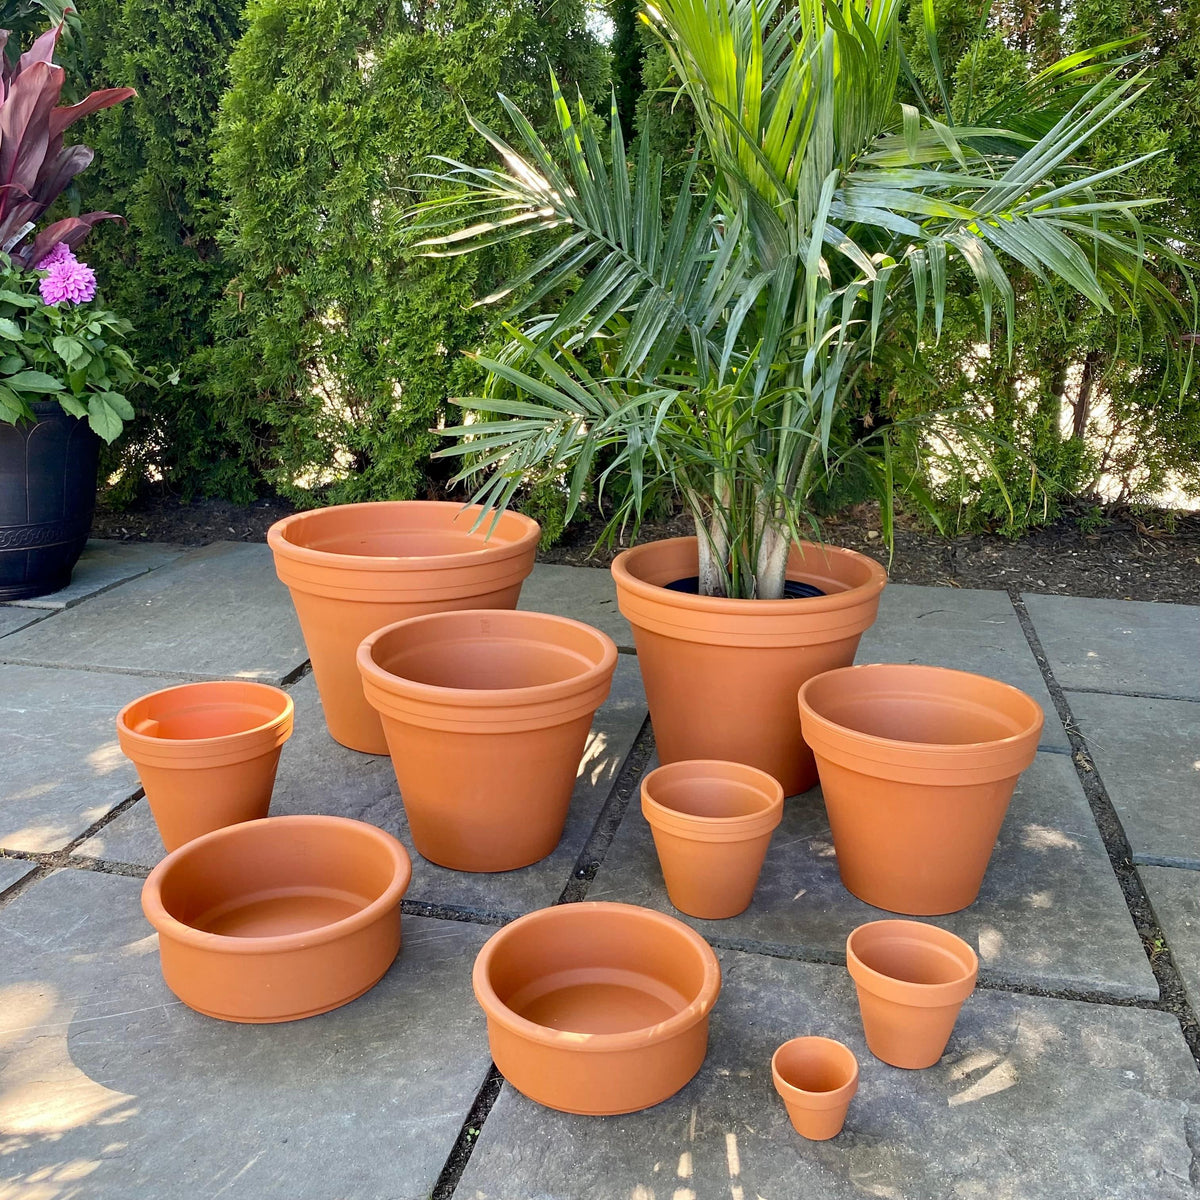 Clay pot - 6-inch